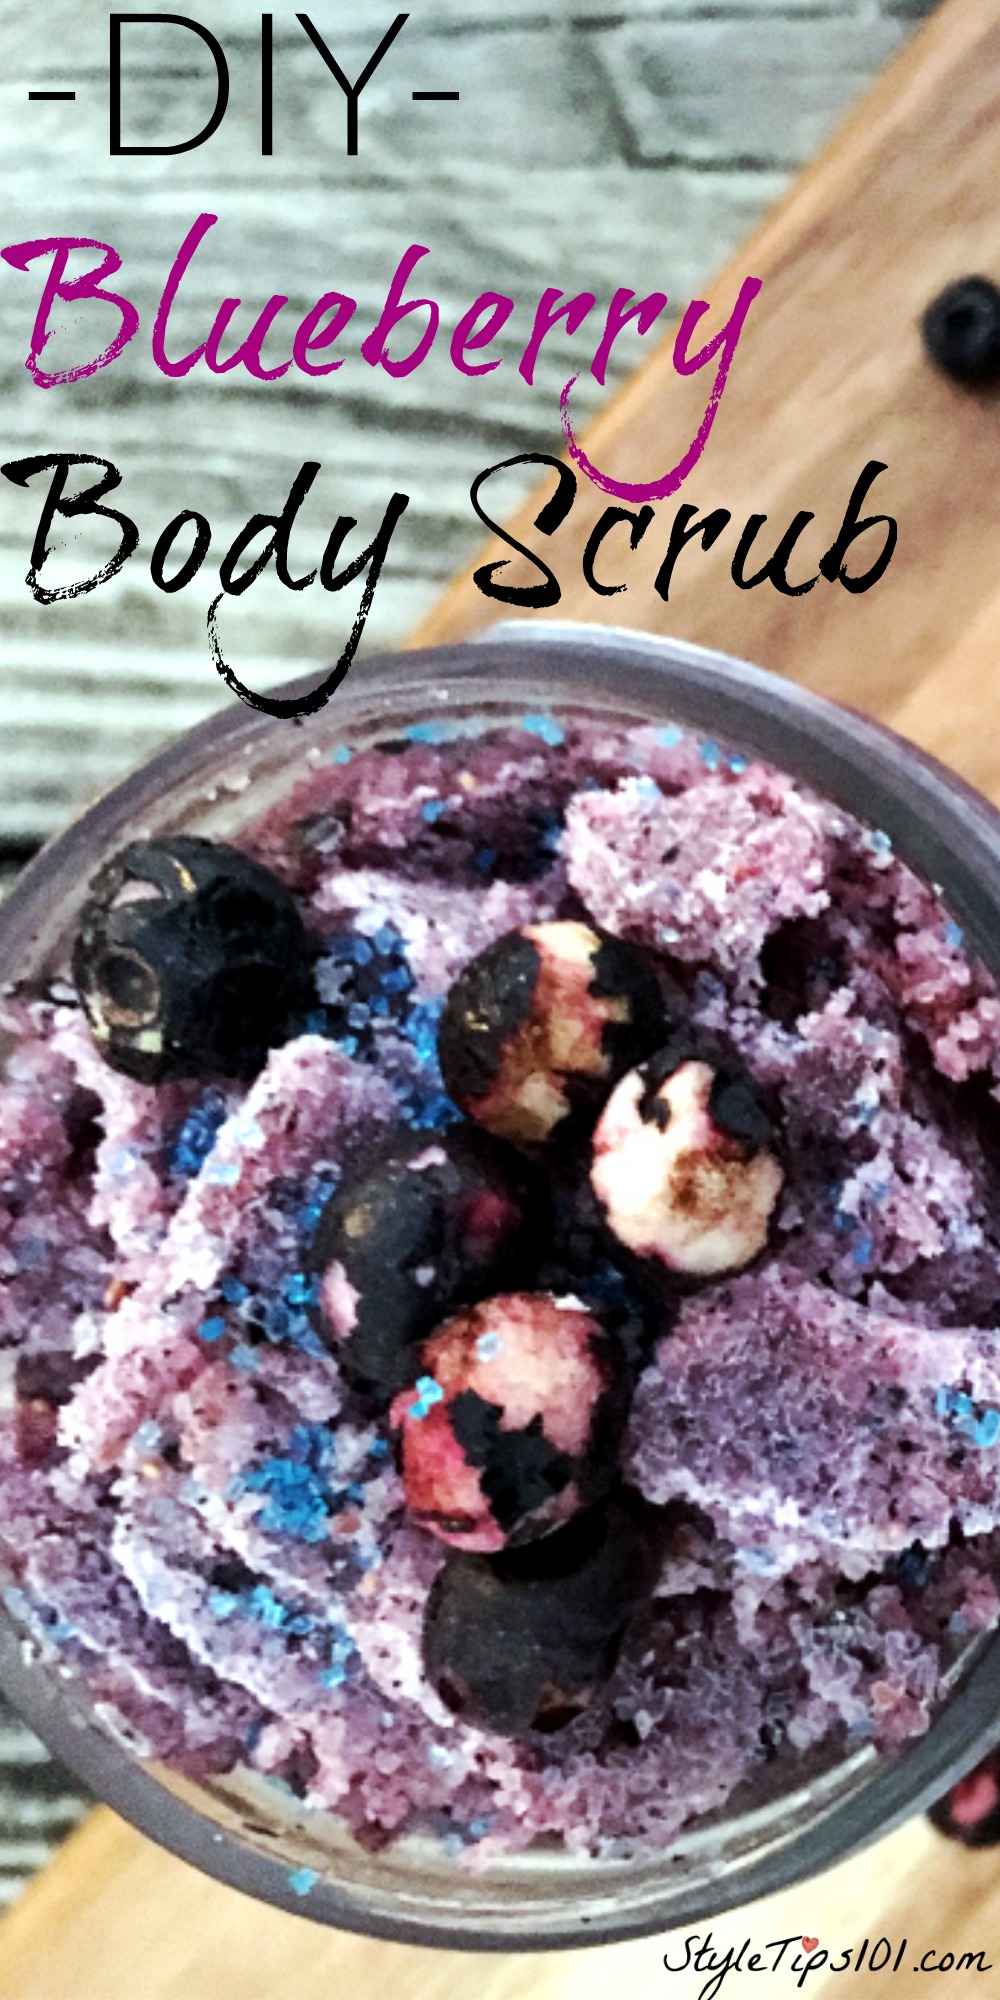 Blueberry Body Scrub